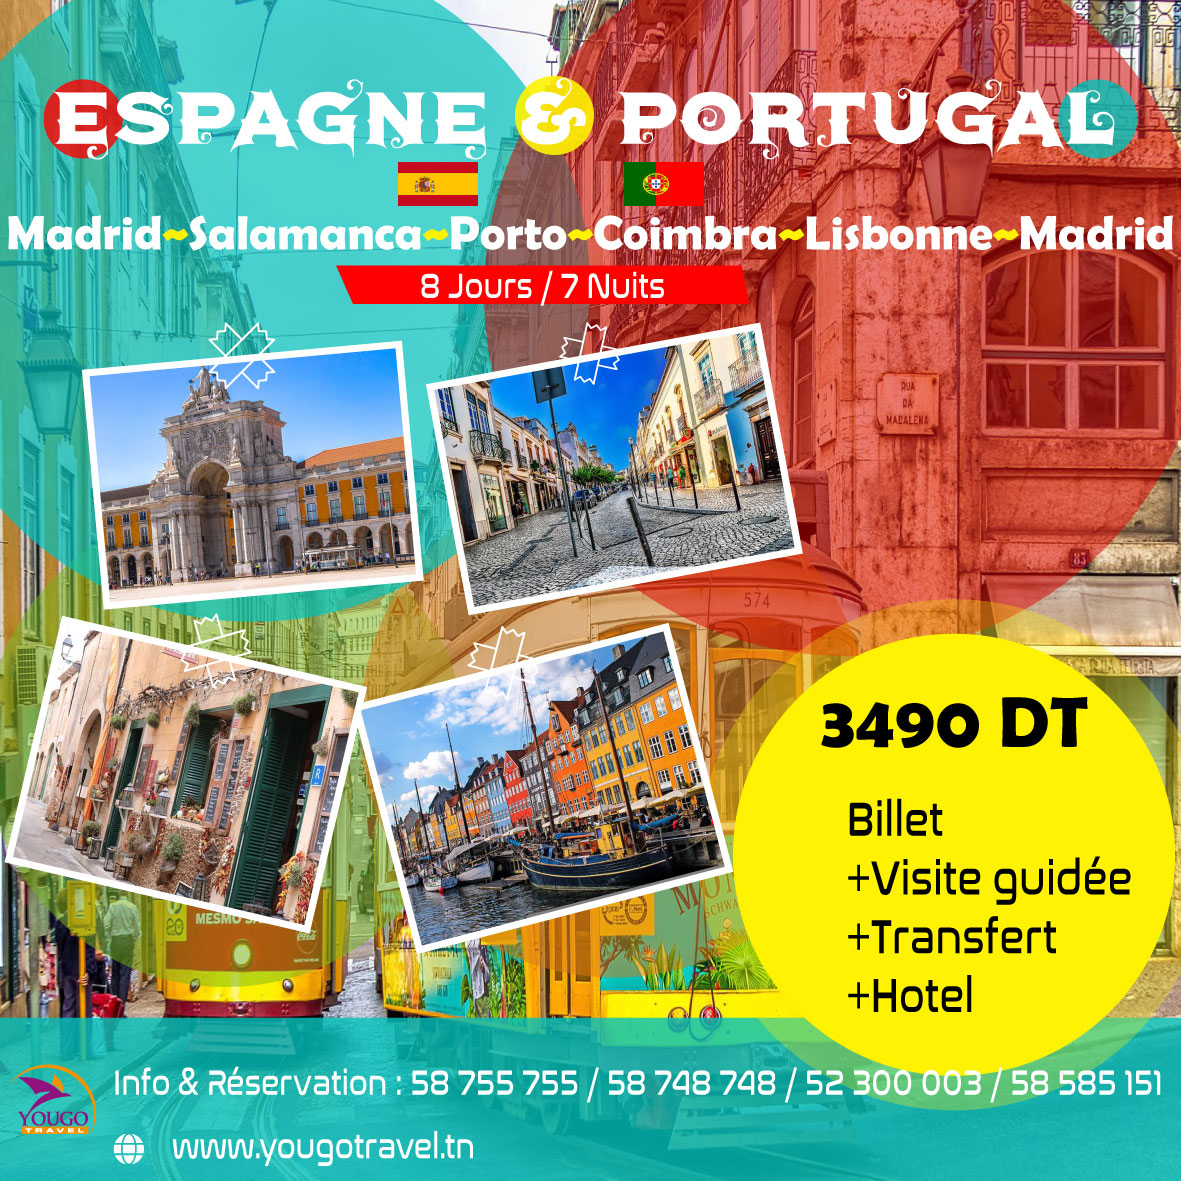 ESPAGNE-PORTUGAL(Madrid-Salamanca-Porto-coimbra-Lisbonne)